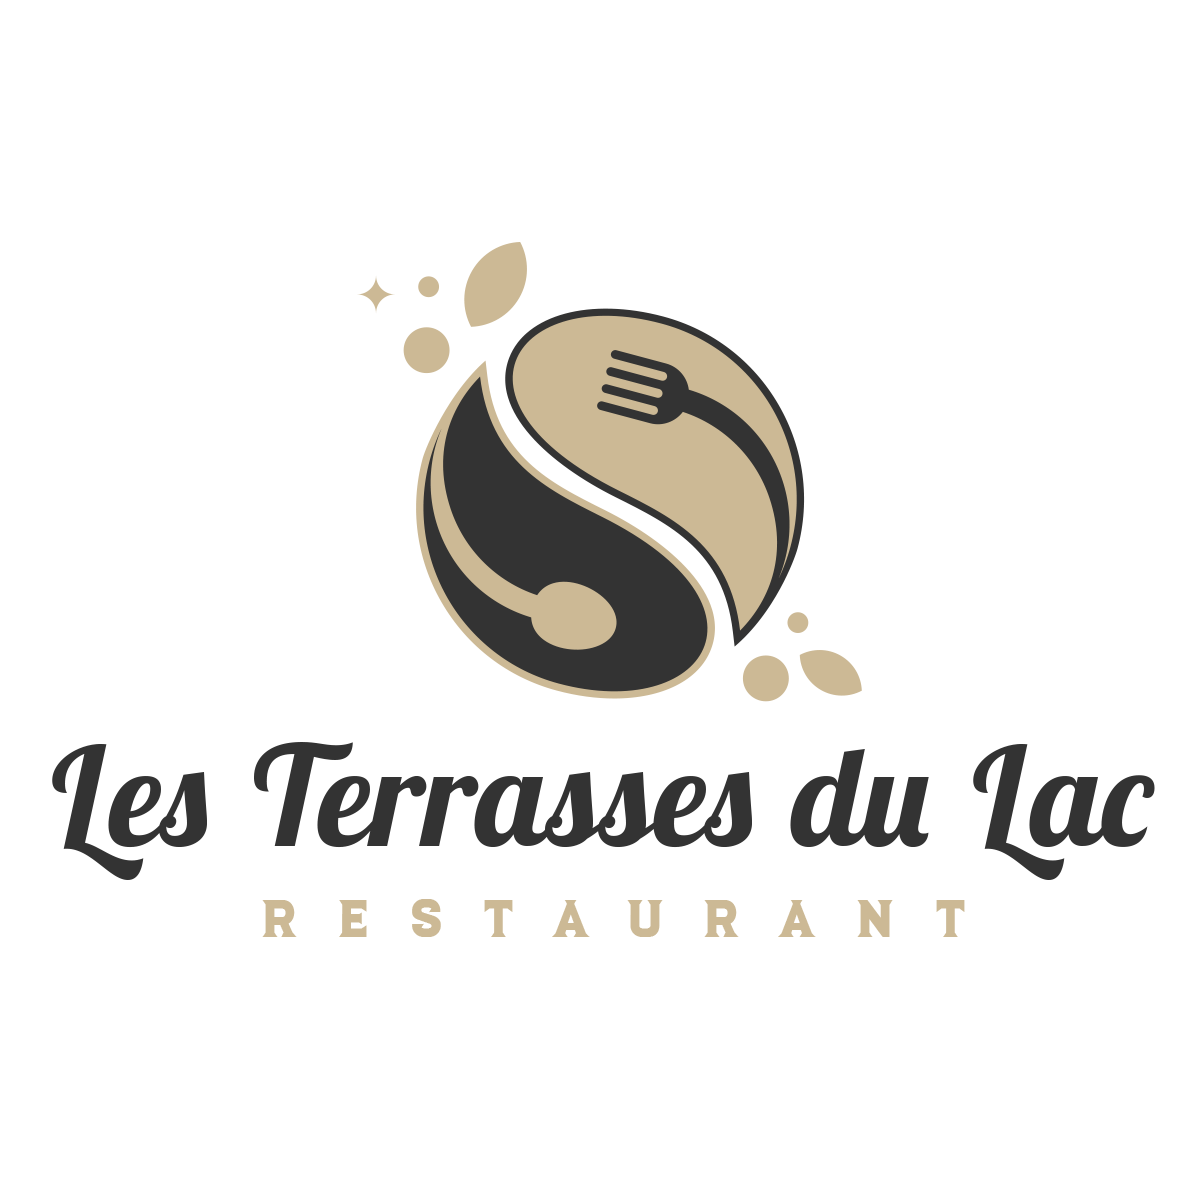 TerrassesDuLac-Logo-Quadri